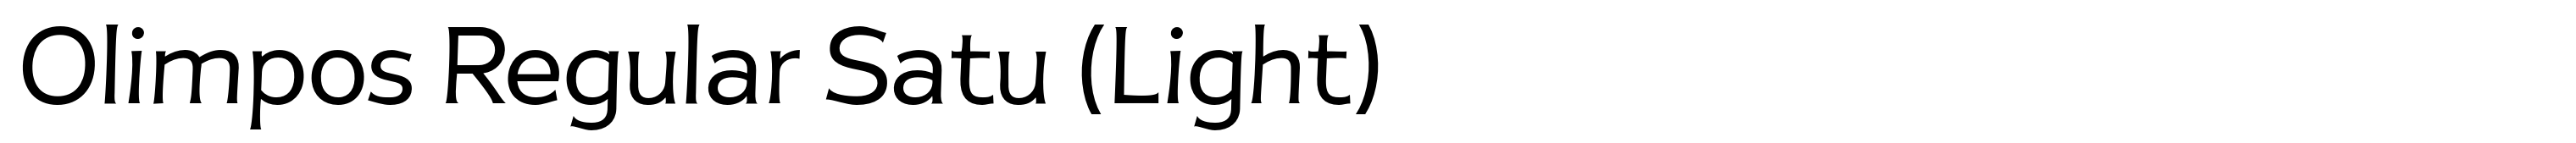 Olimpos Regular Satu (Light)